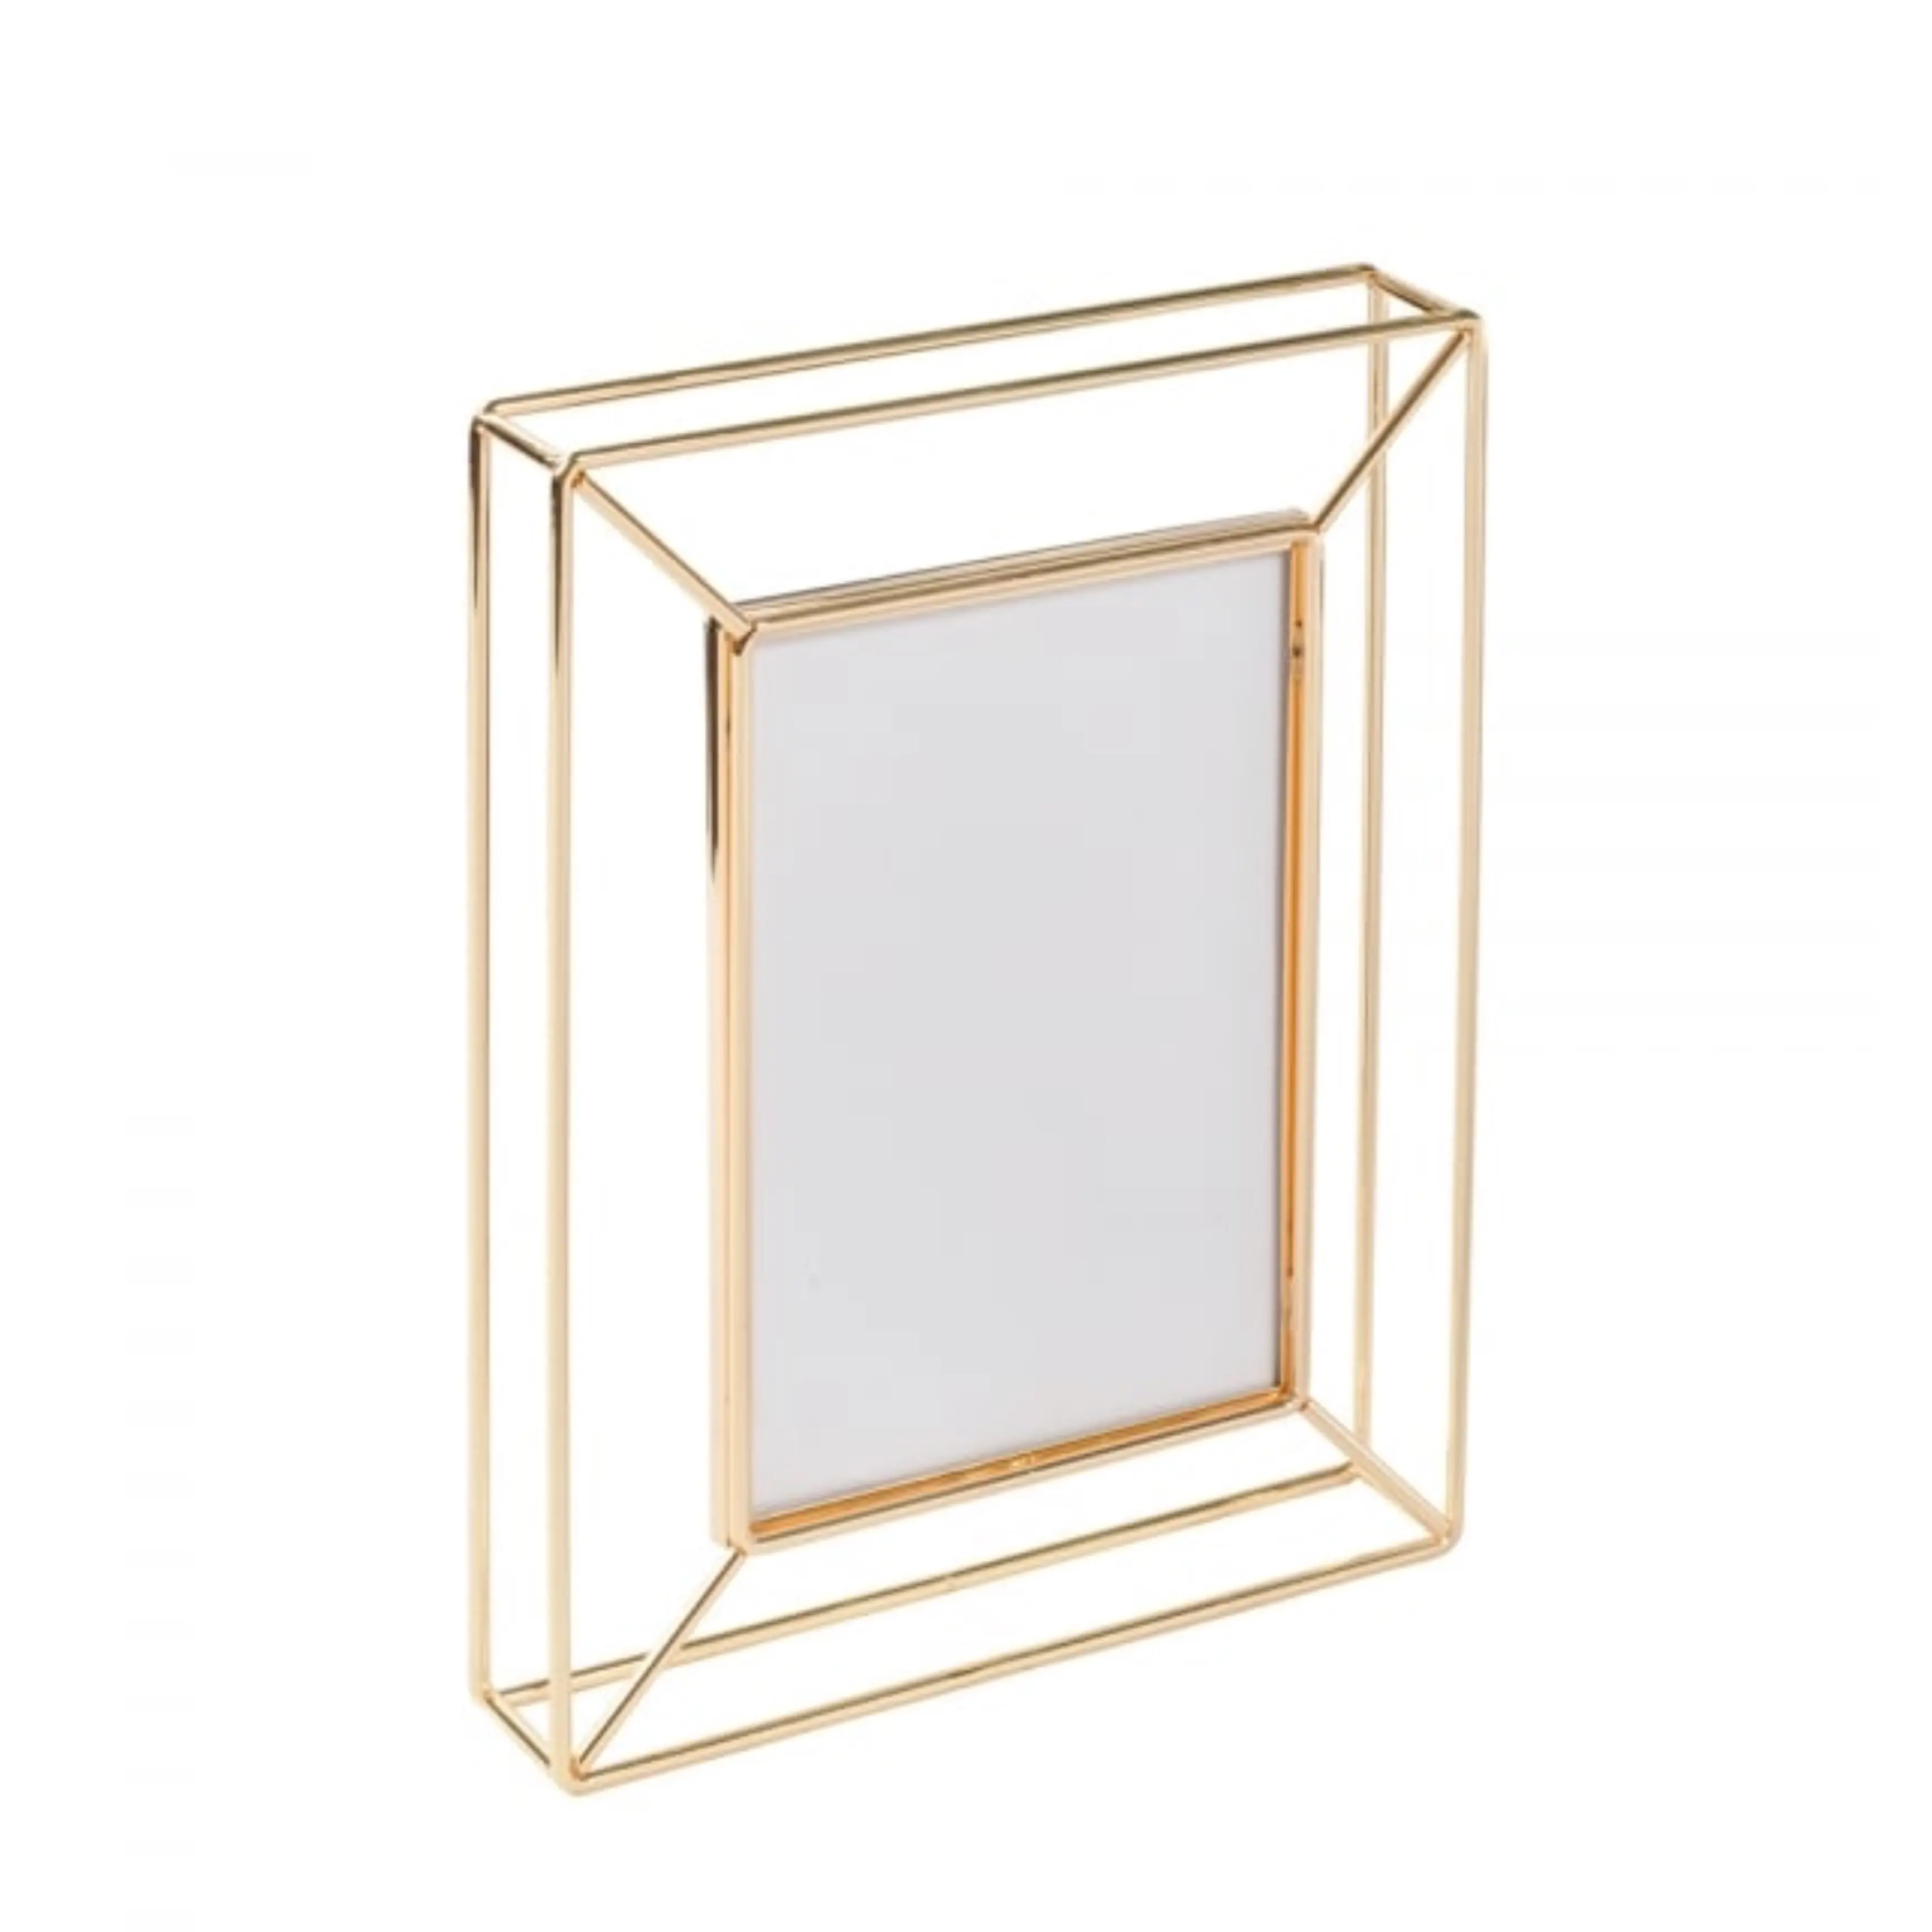 Latest Desktop Designer Glass and Metal Photo Frame Premium Quality Handmade From Direct Supplier